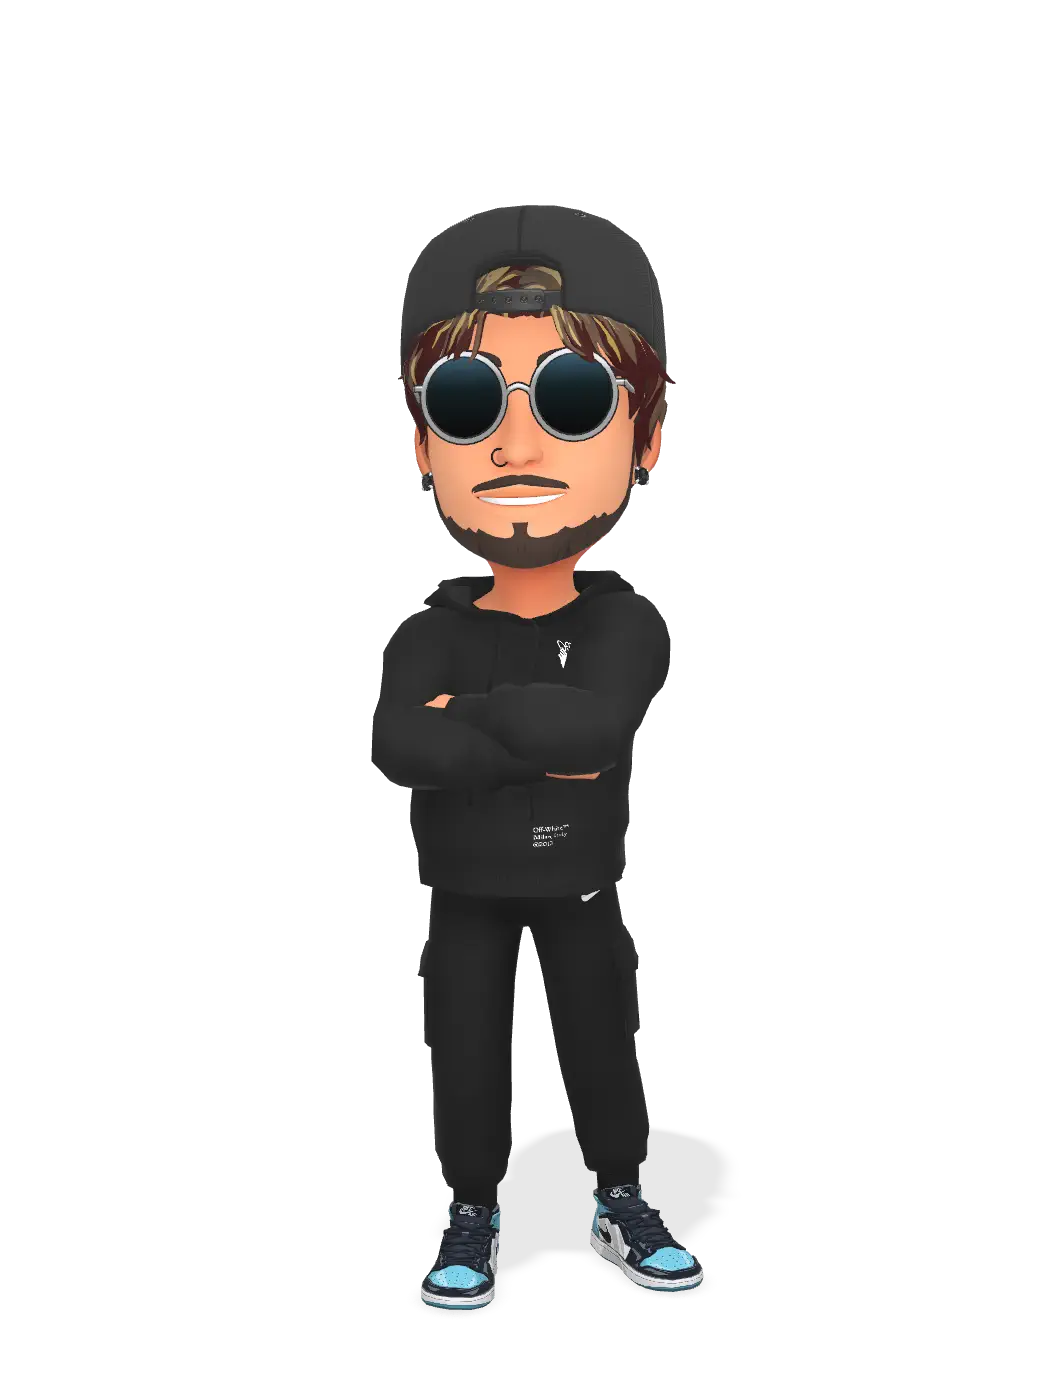 3D Bitmoji for ifegley36 avatar